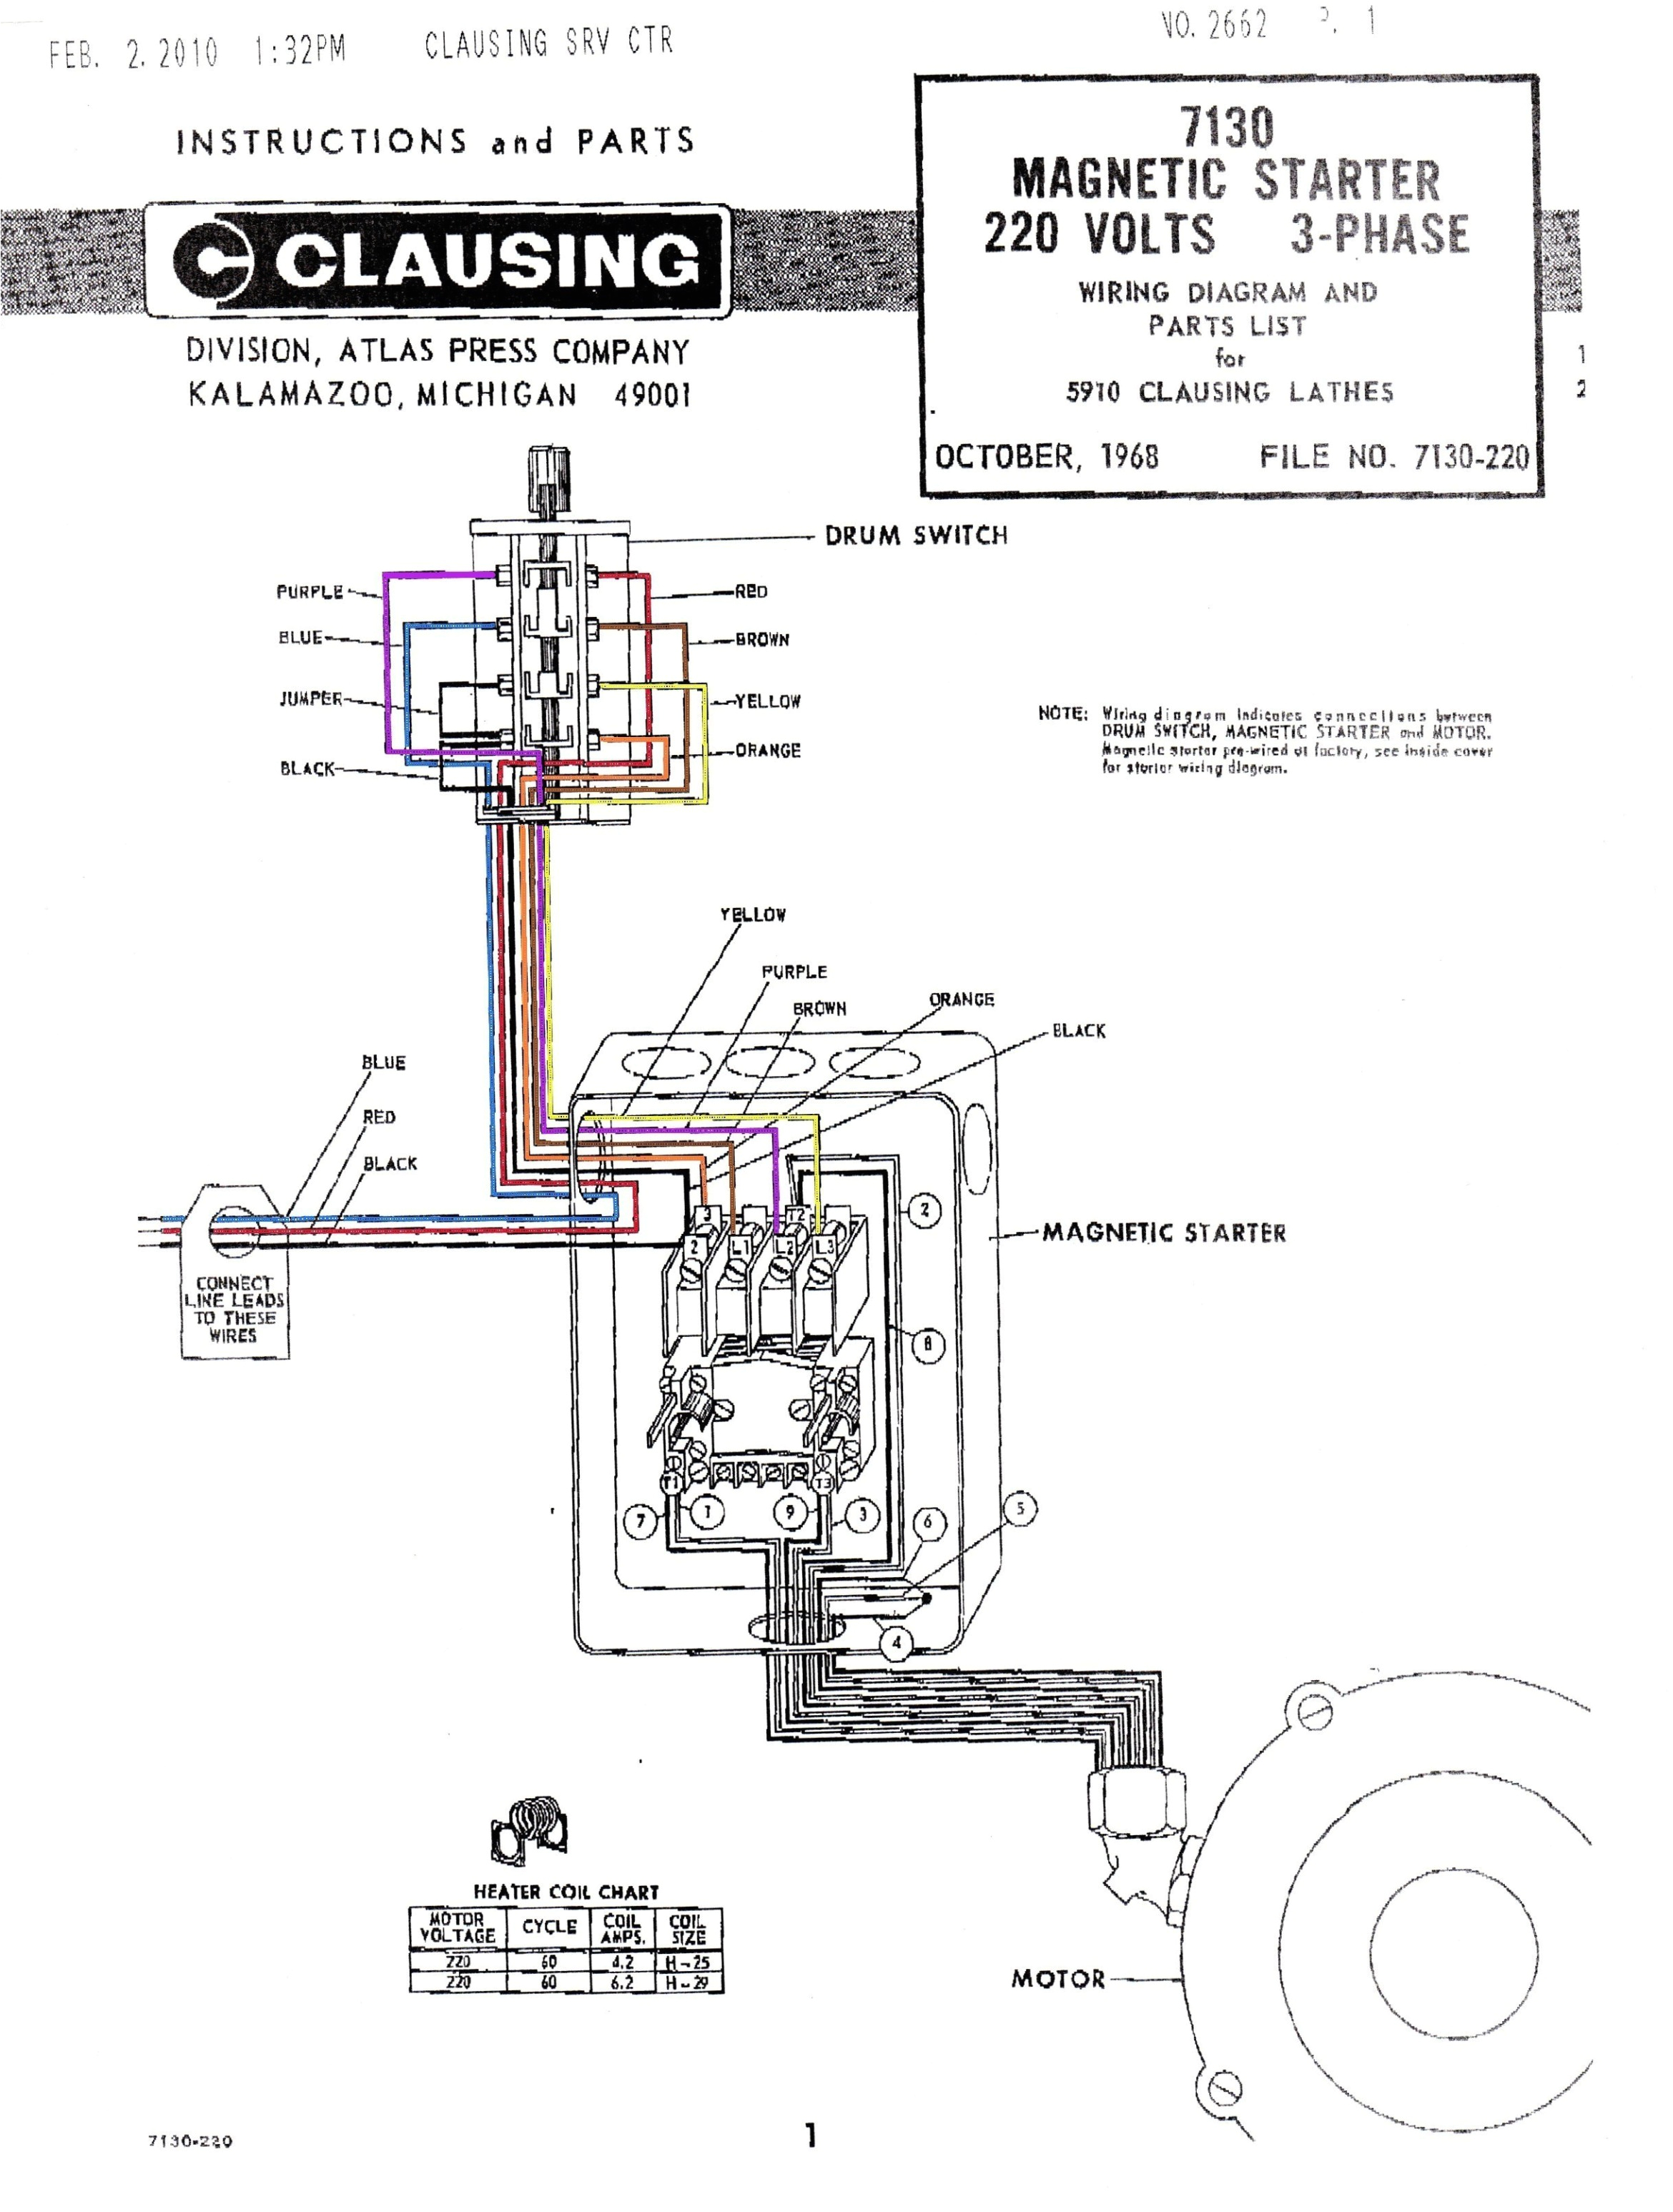 cutler hammer contactor wiring diagram